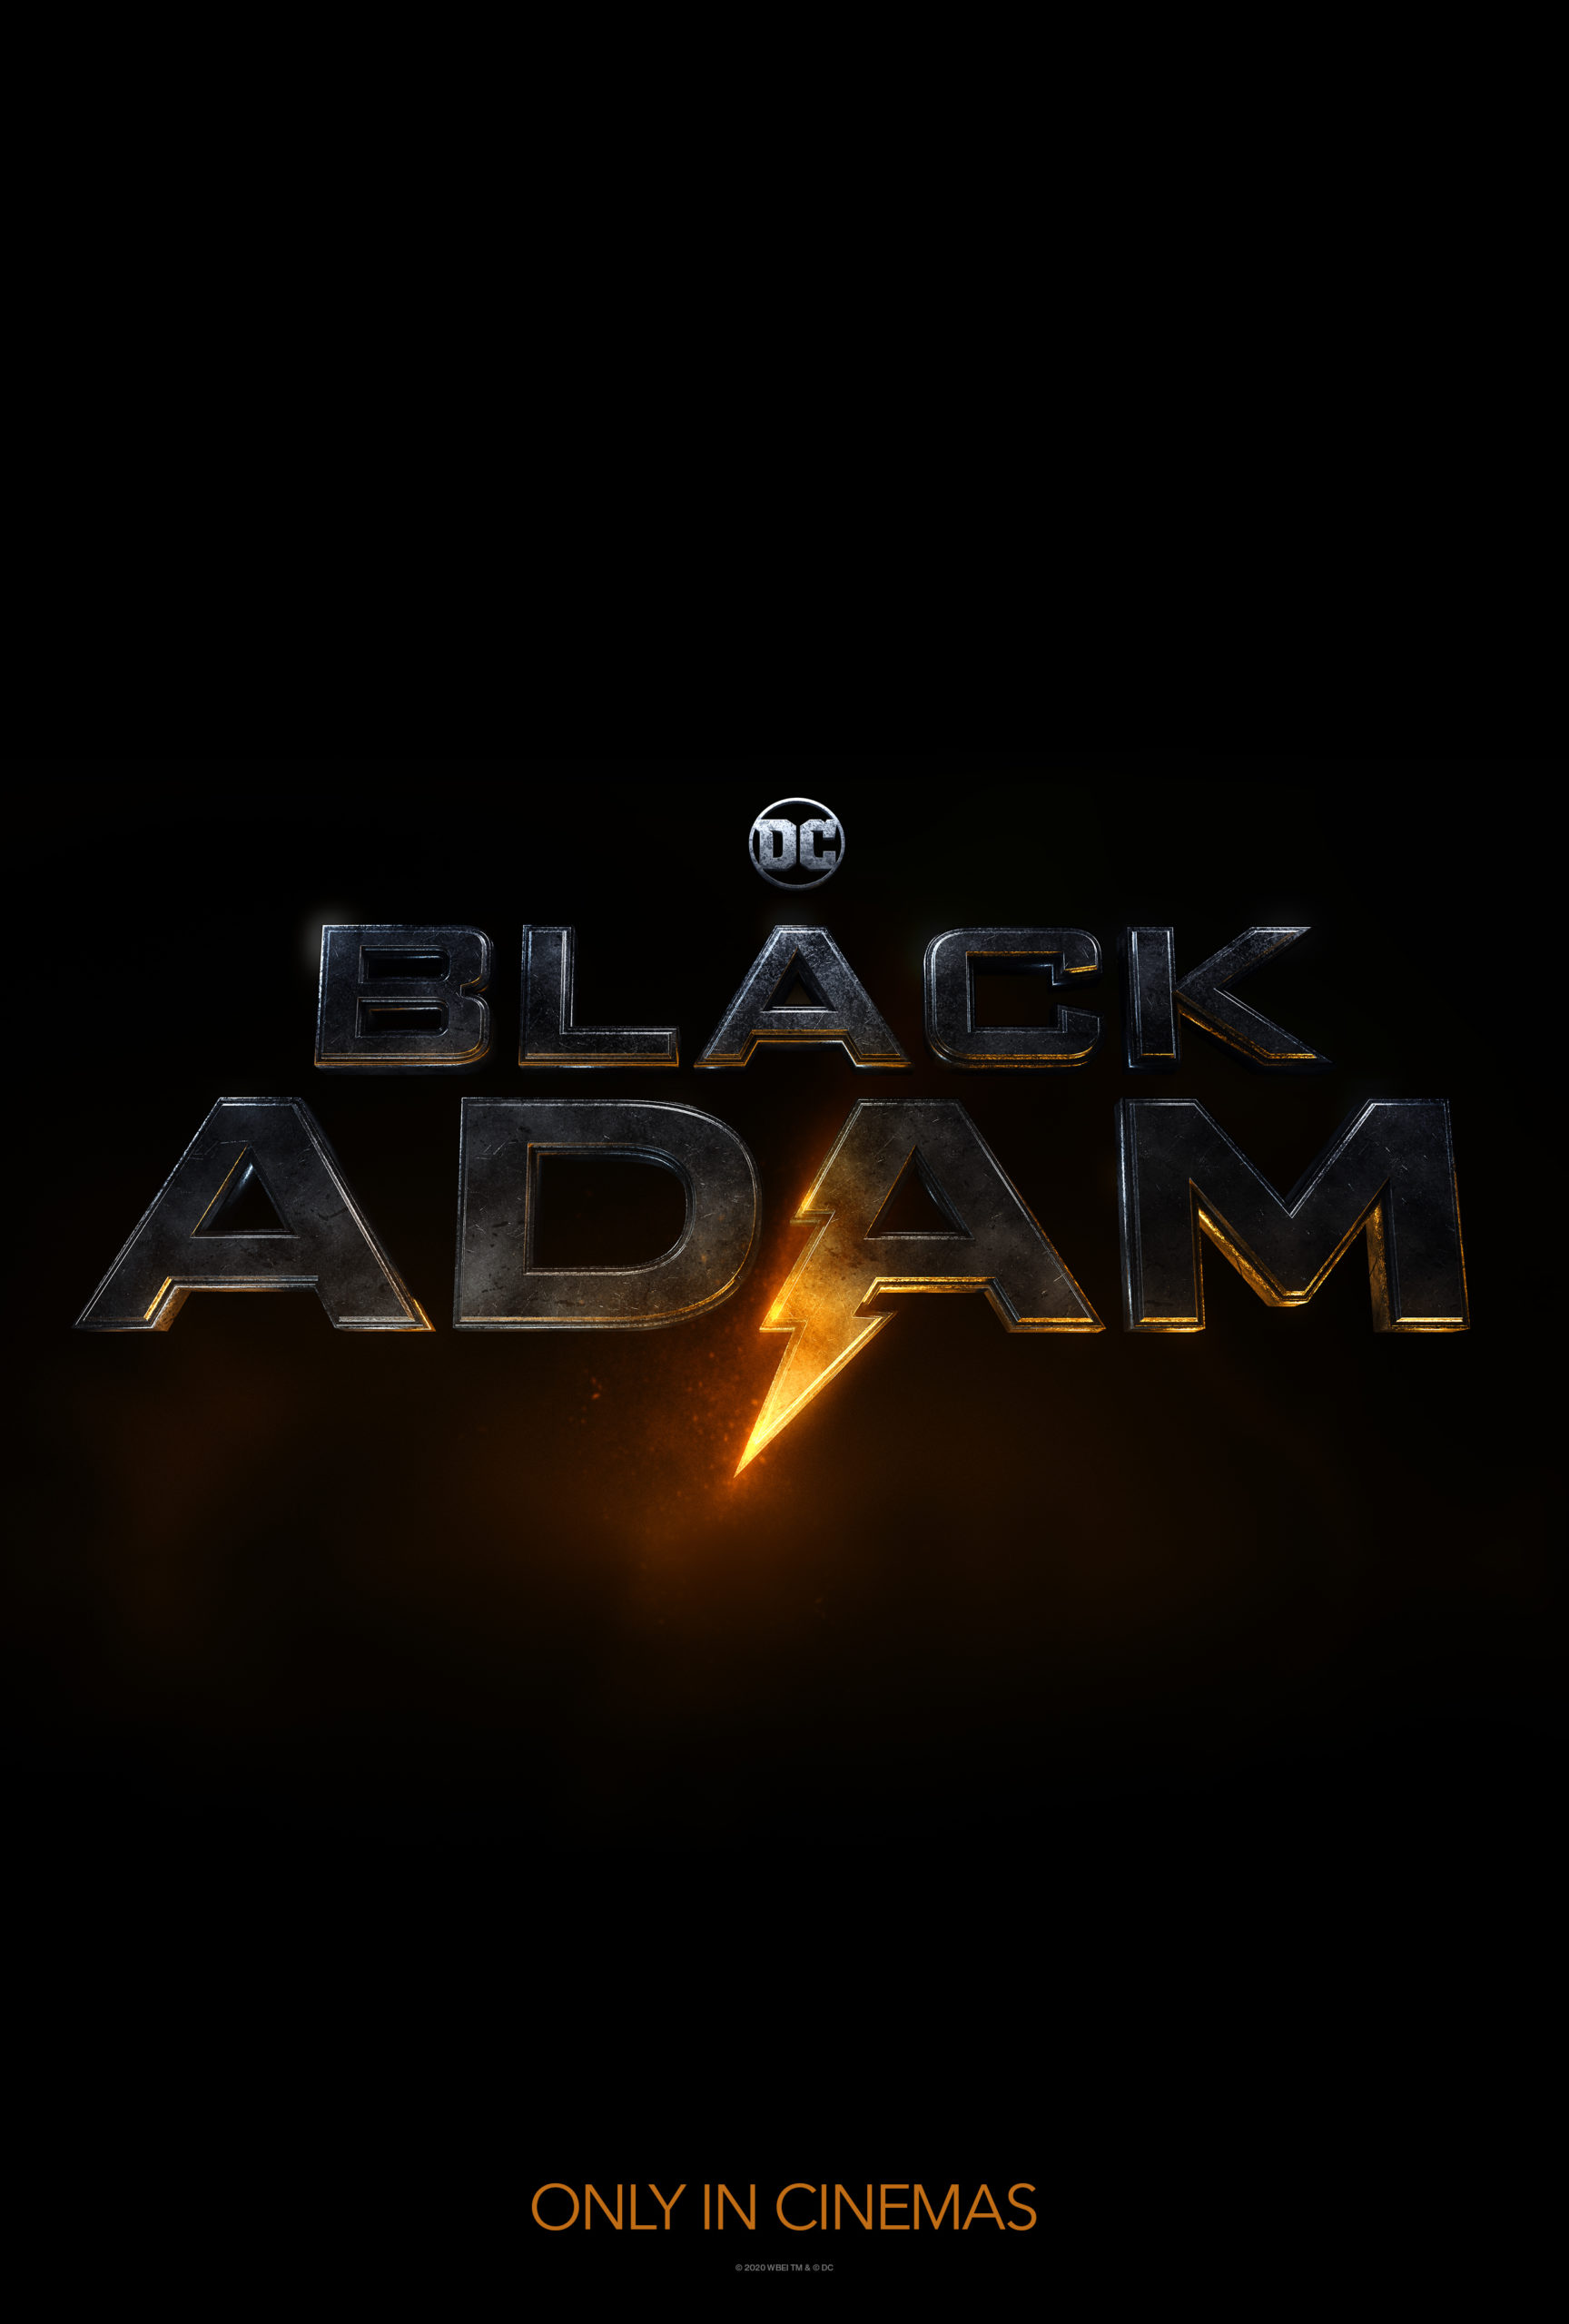 The Black Adam logo. (Image: Warner Bros.)